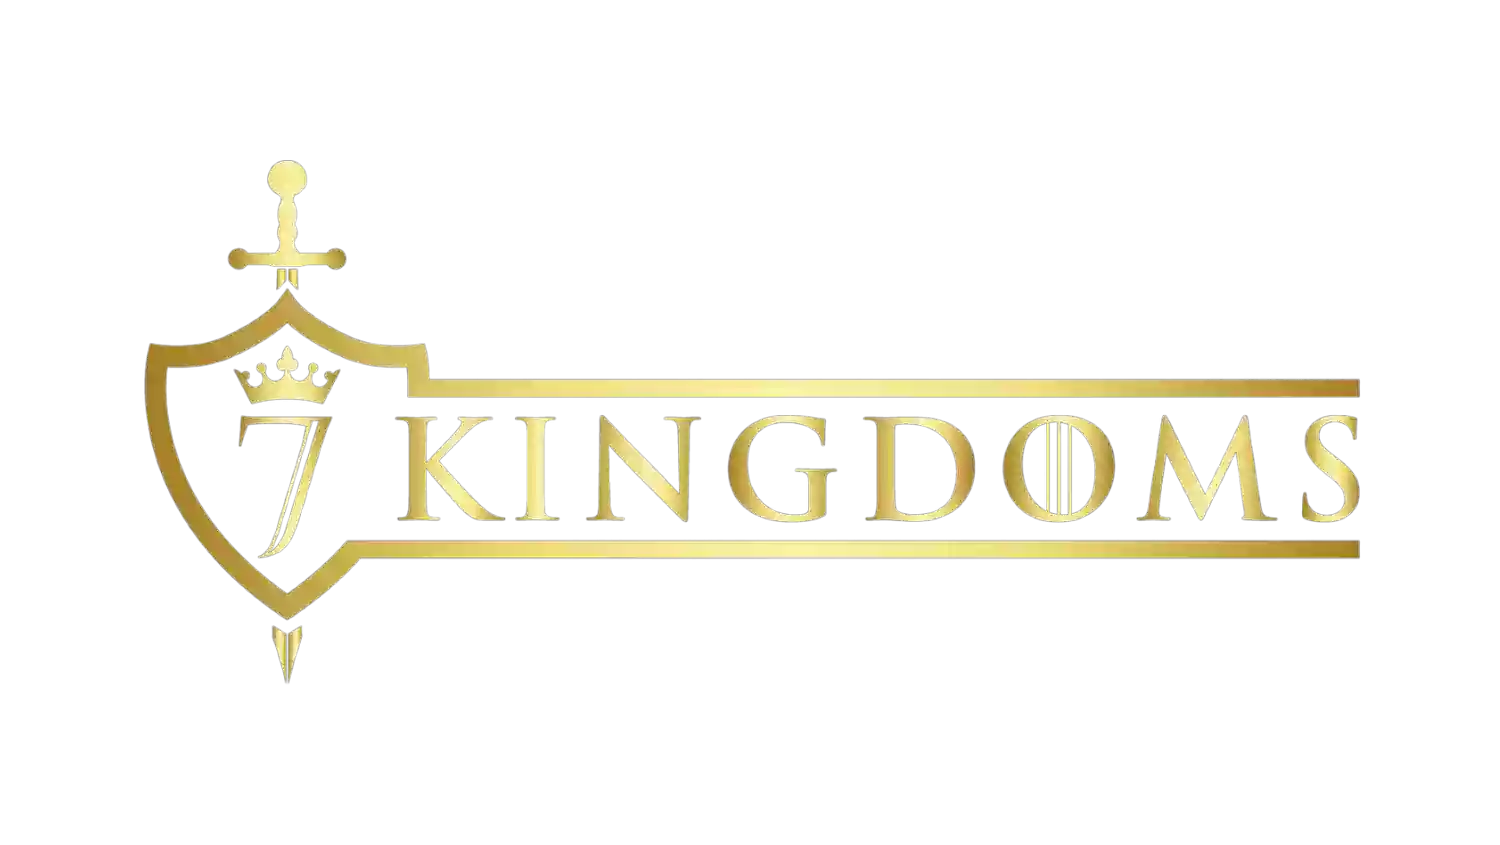 7 Kingdoms